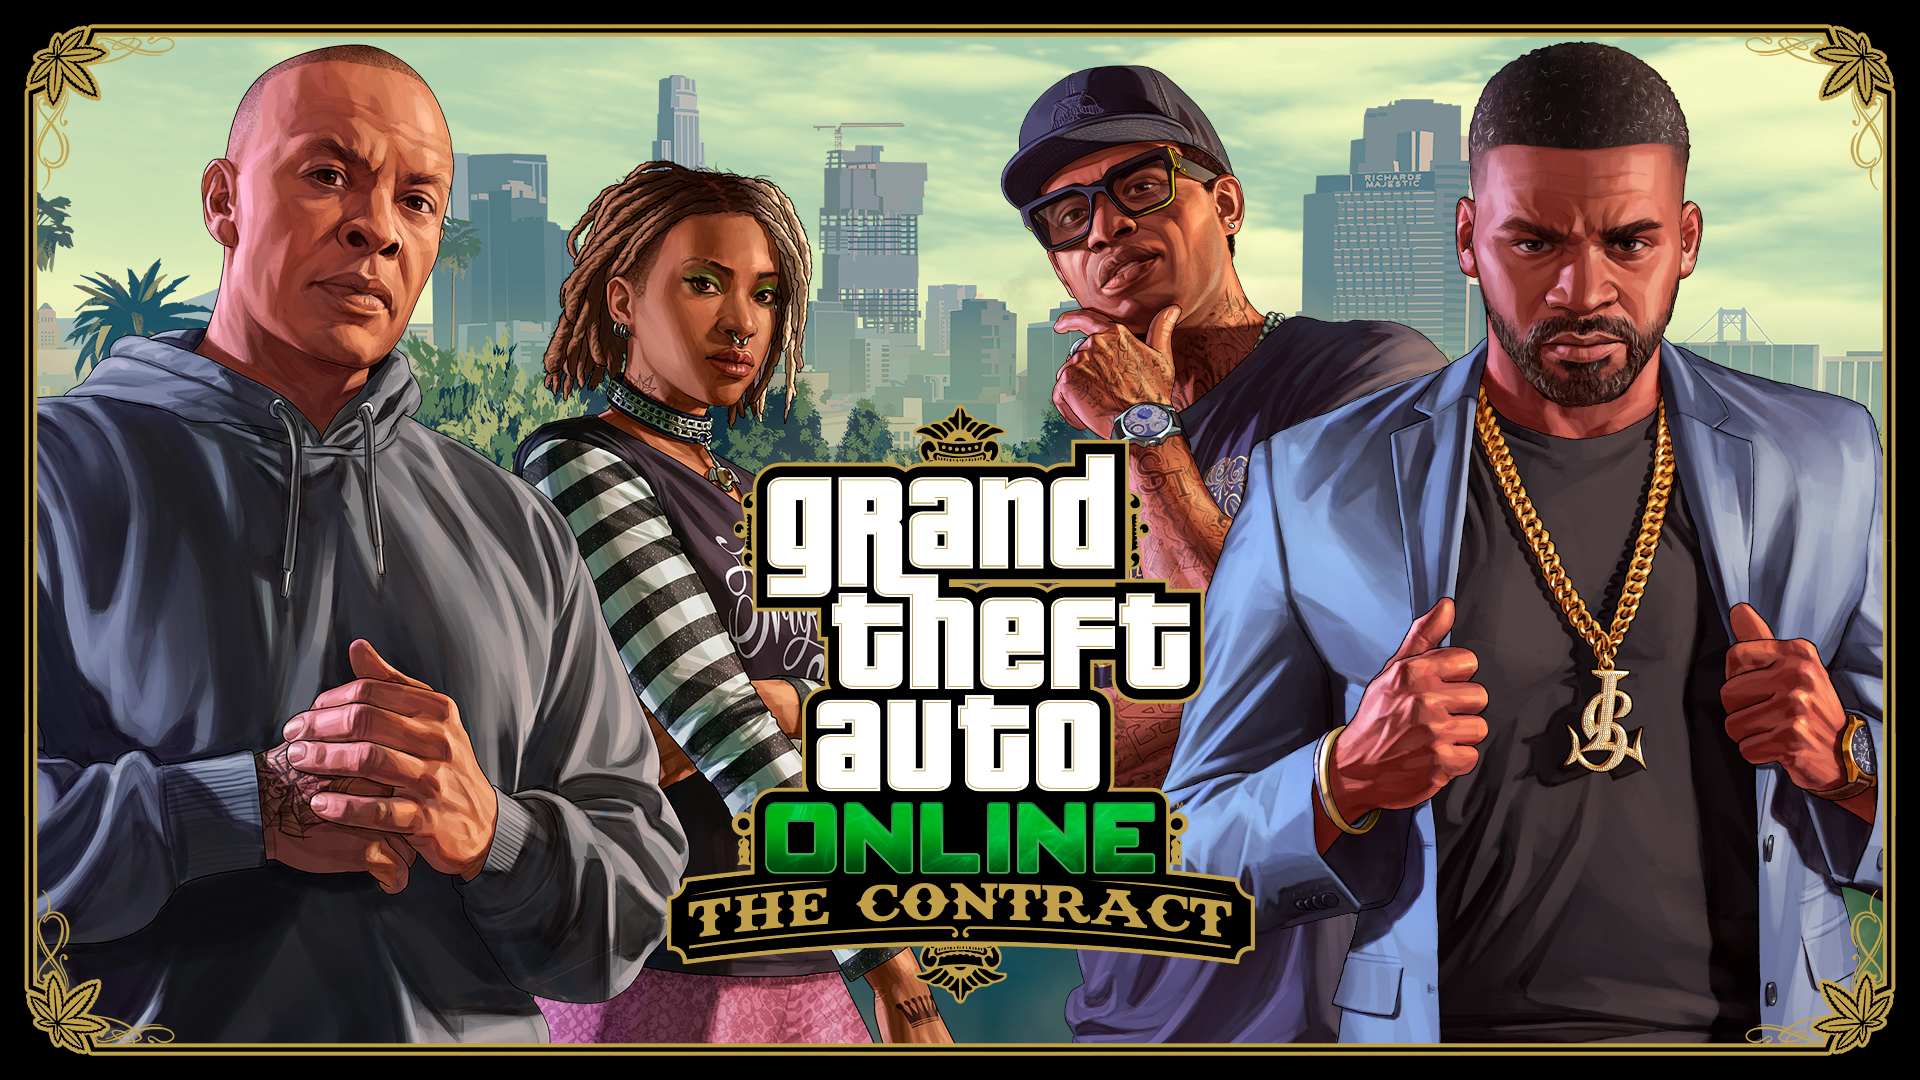 'Grand Theft Auto Online' เตรียมปล่อย Episode ใหม่พร้อม Dr. Dre และตัวละครจาก 'GTA 5'